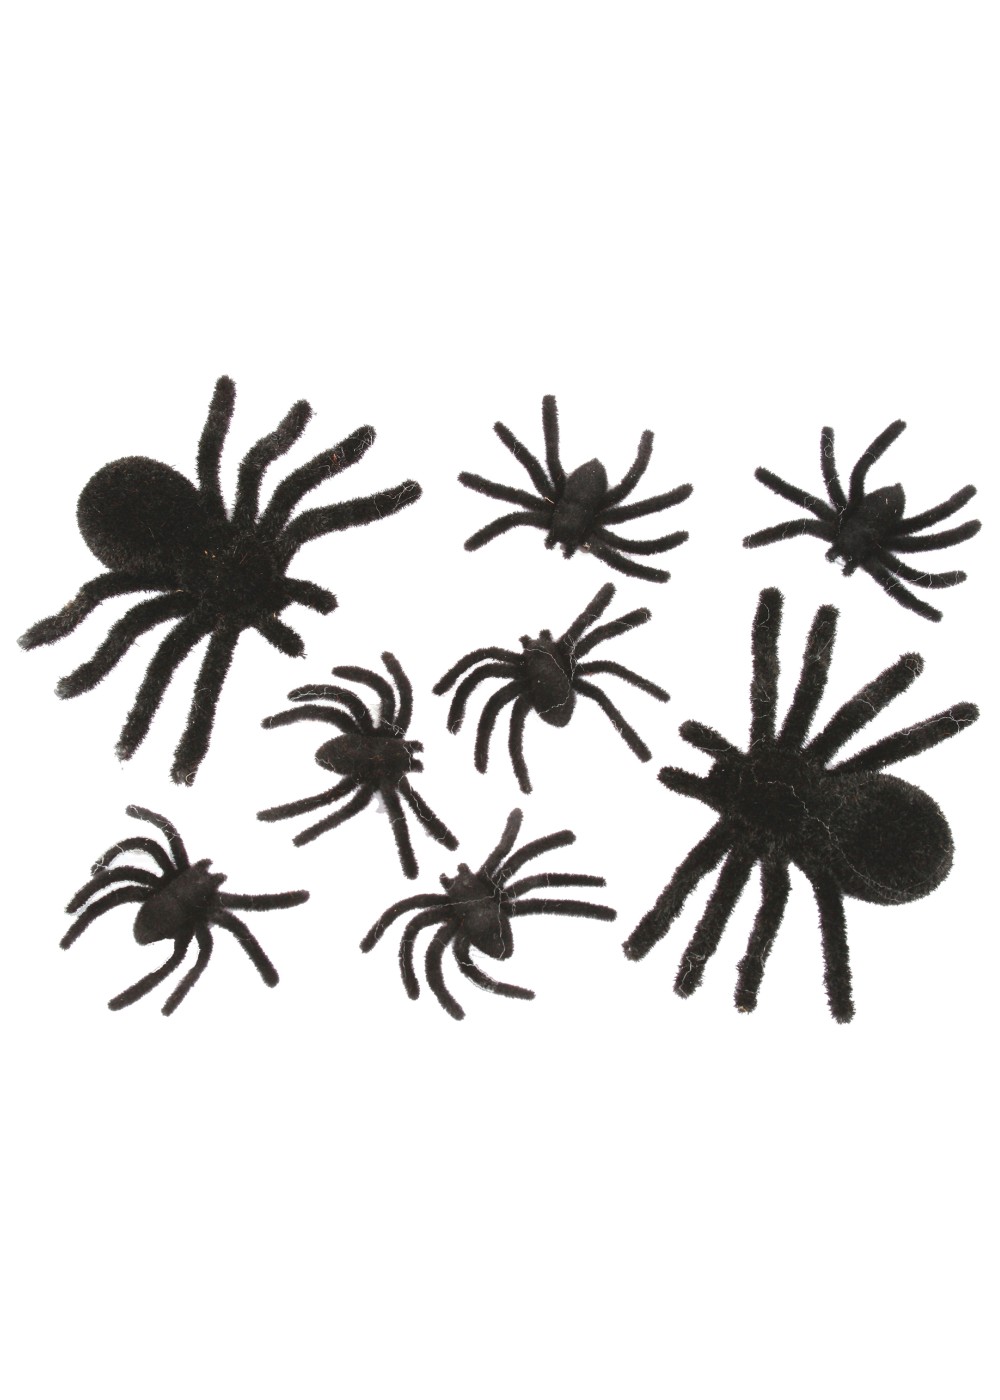 Fuzzy Black Spiders